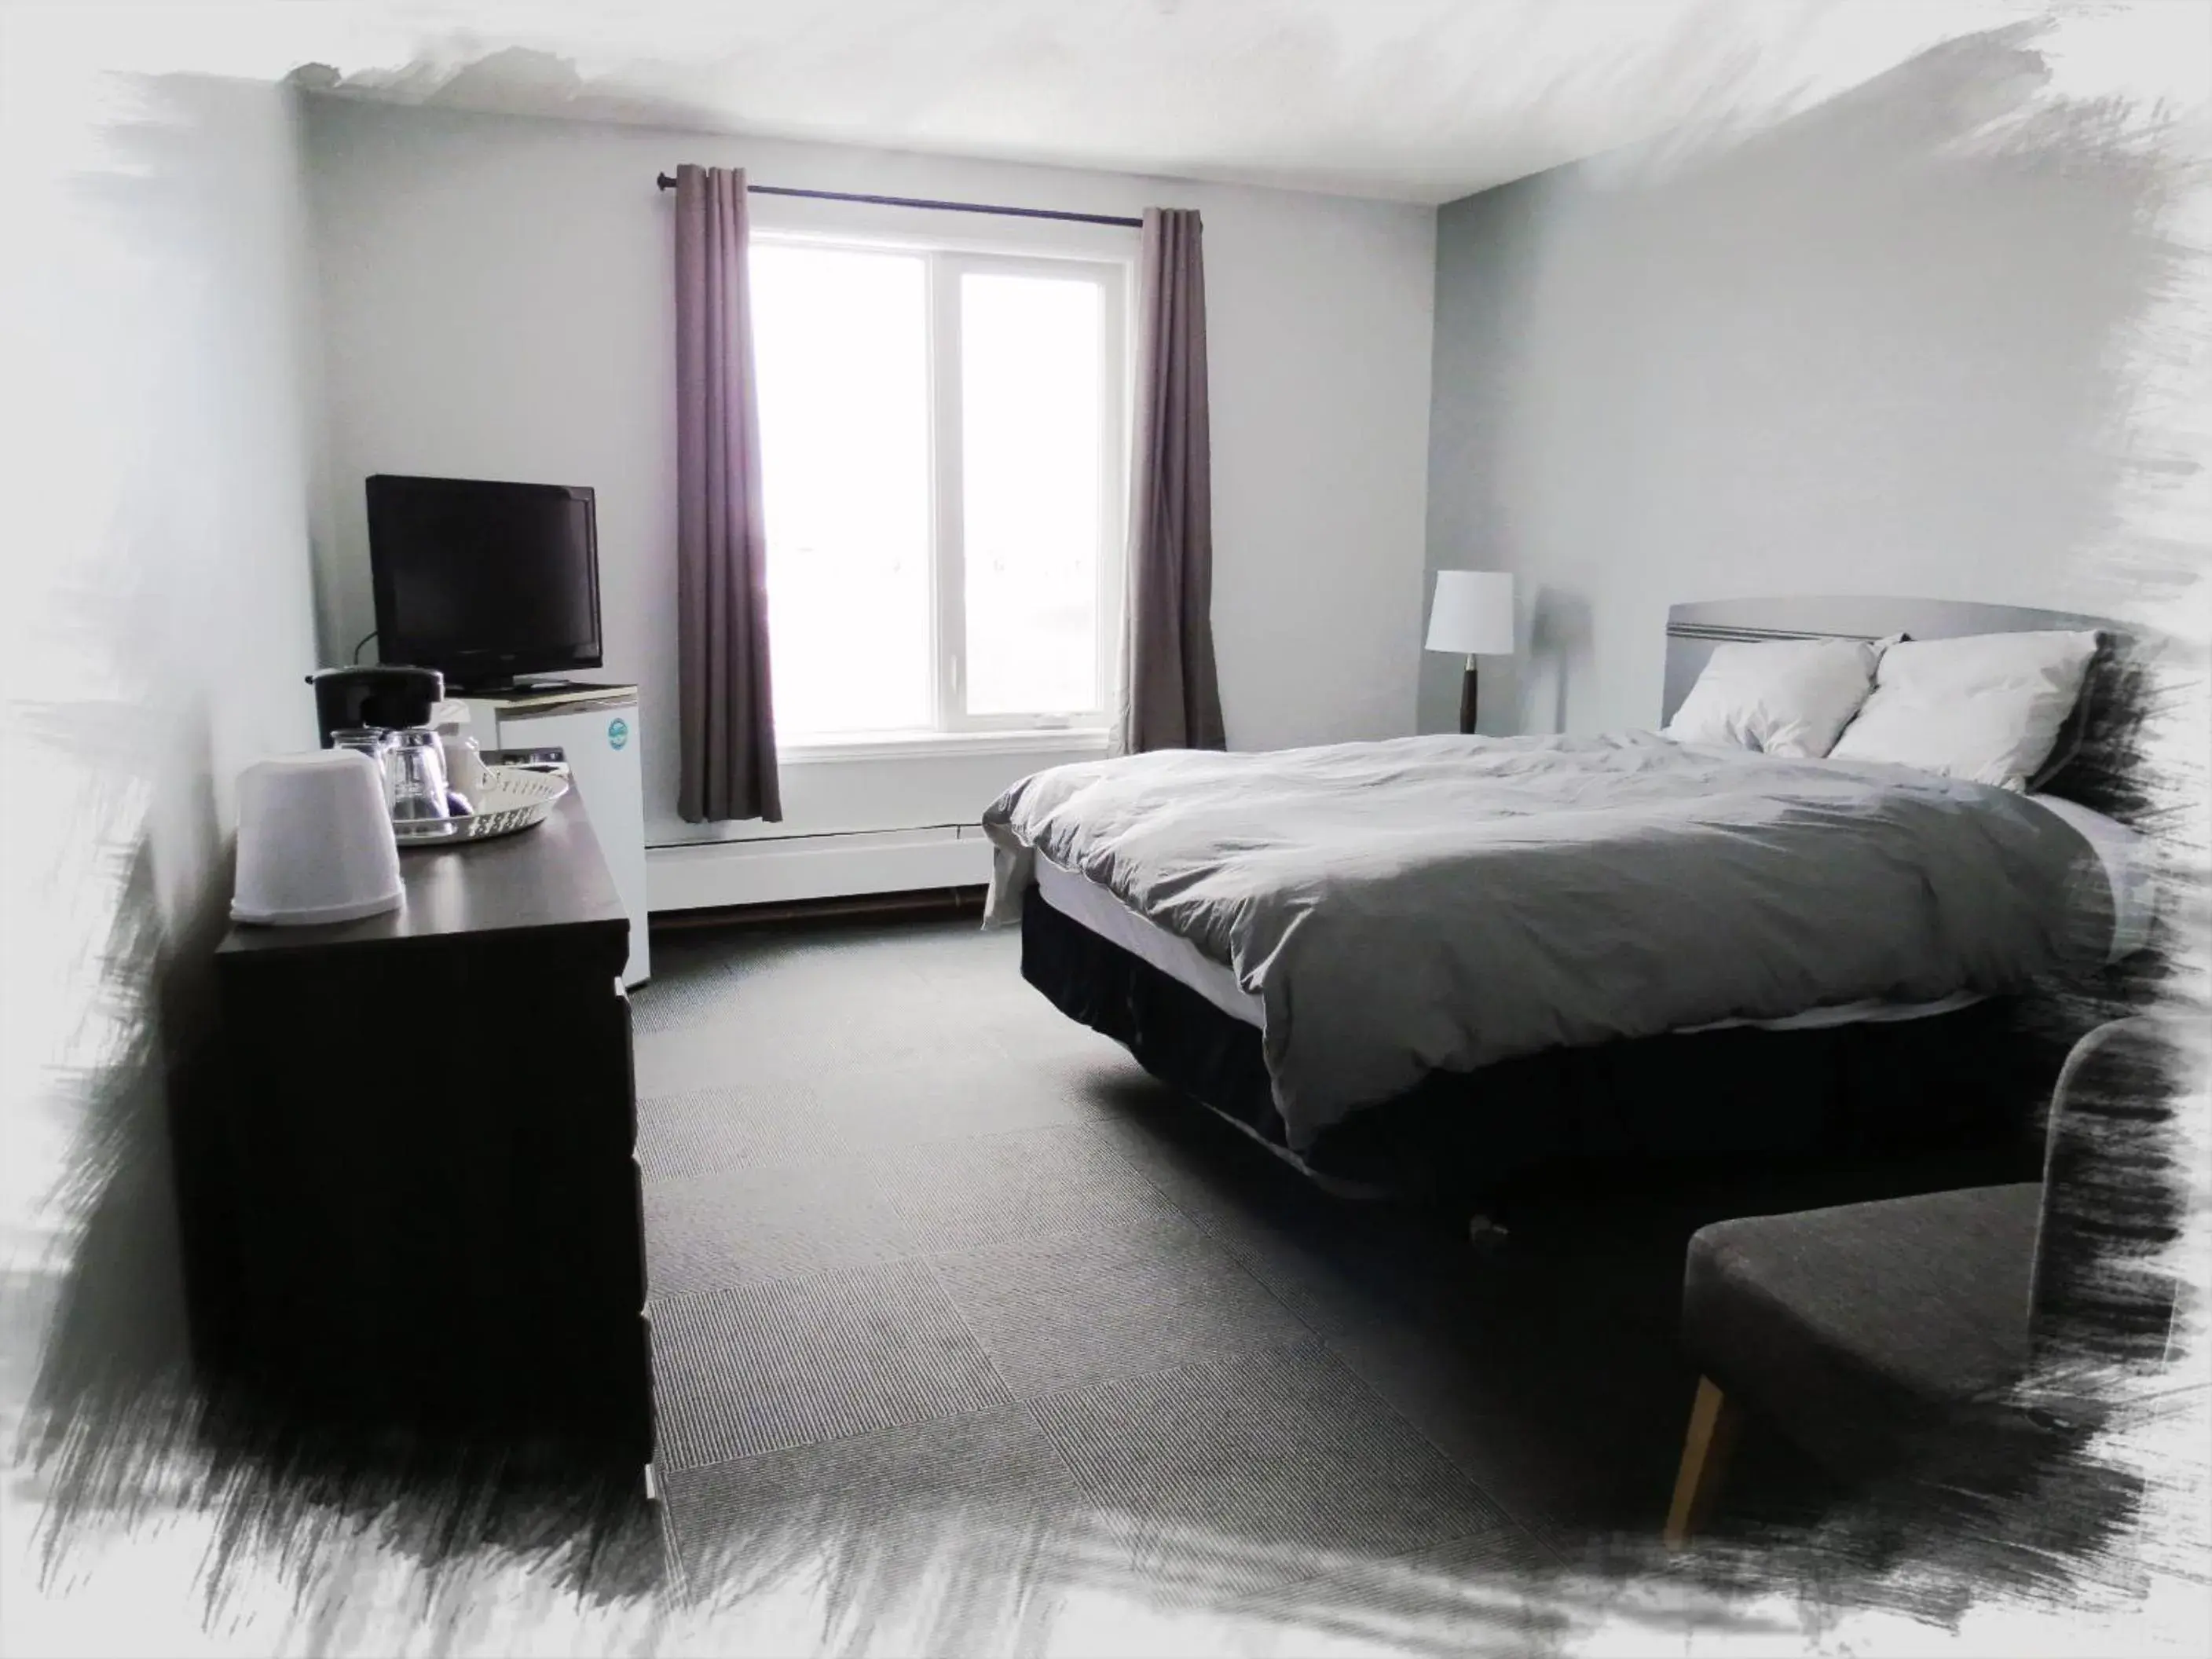 Bedroom, Room Photo in Churchill Hotel